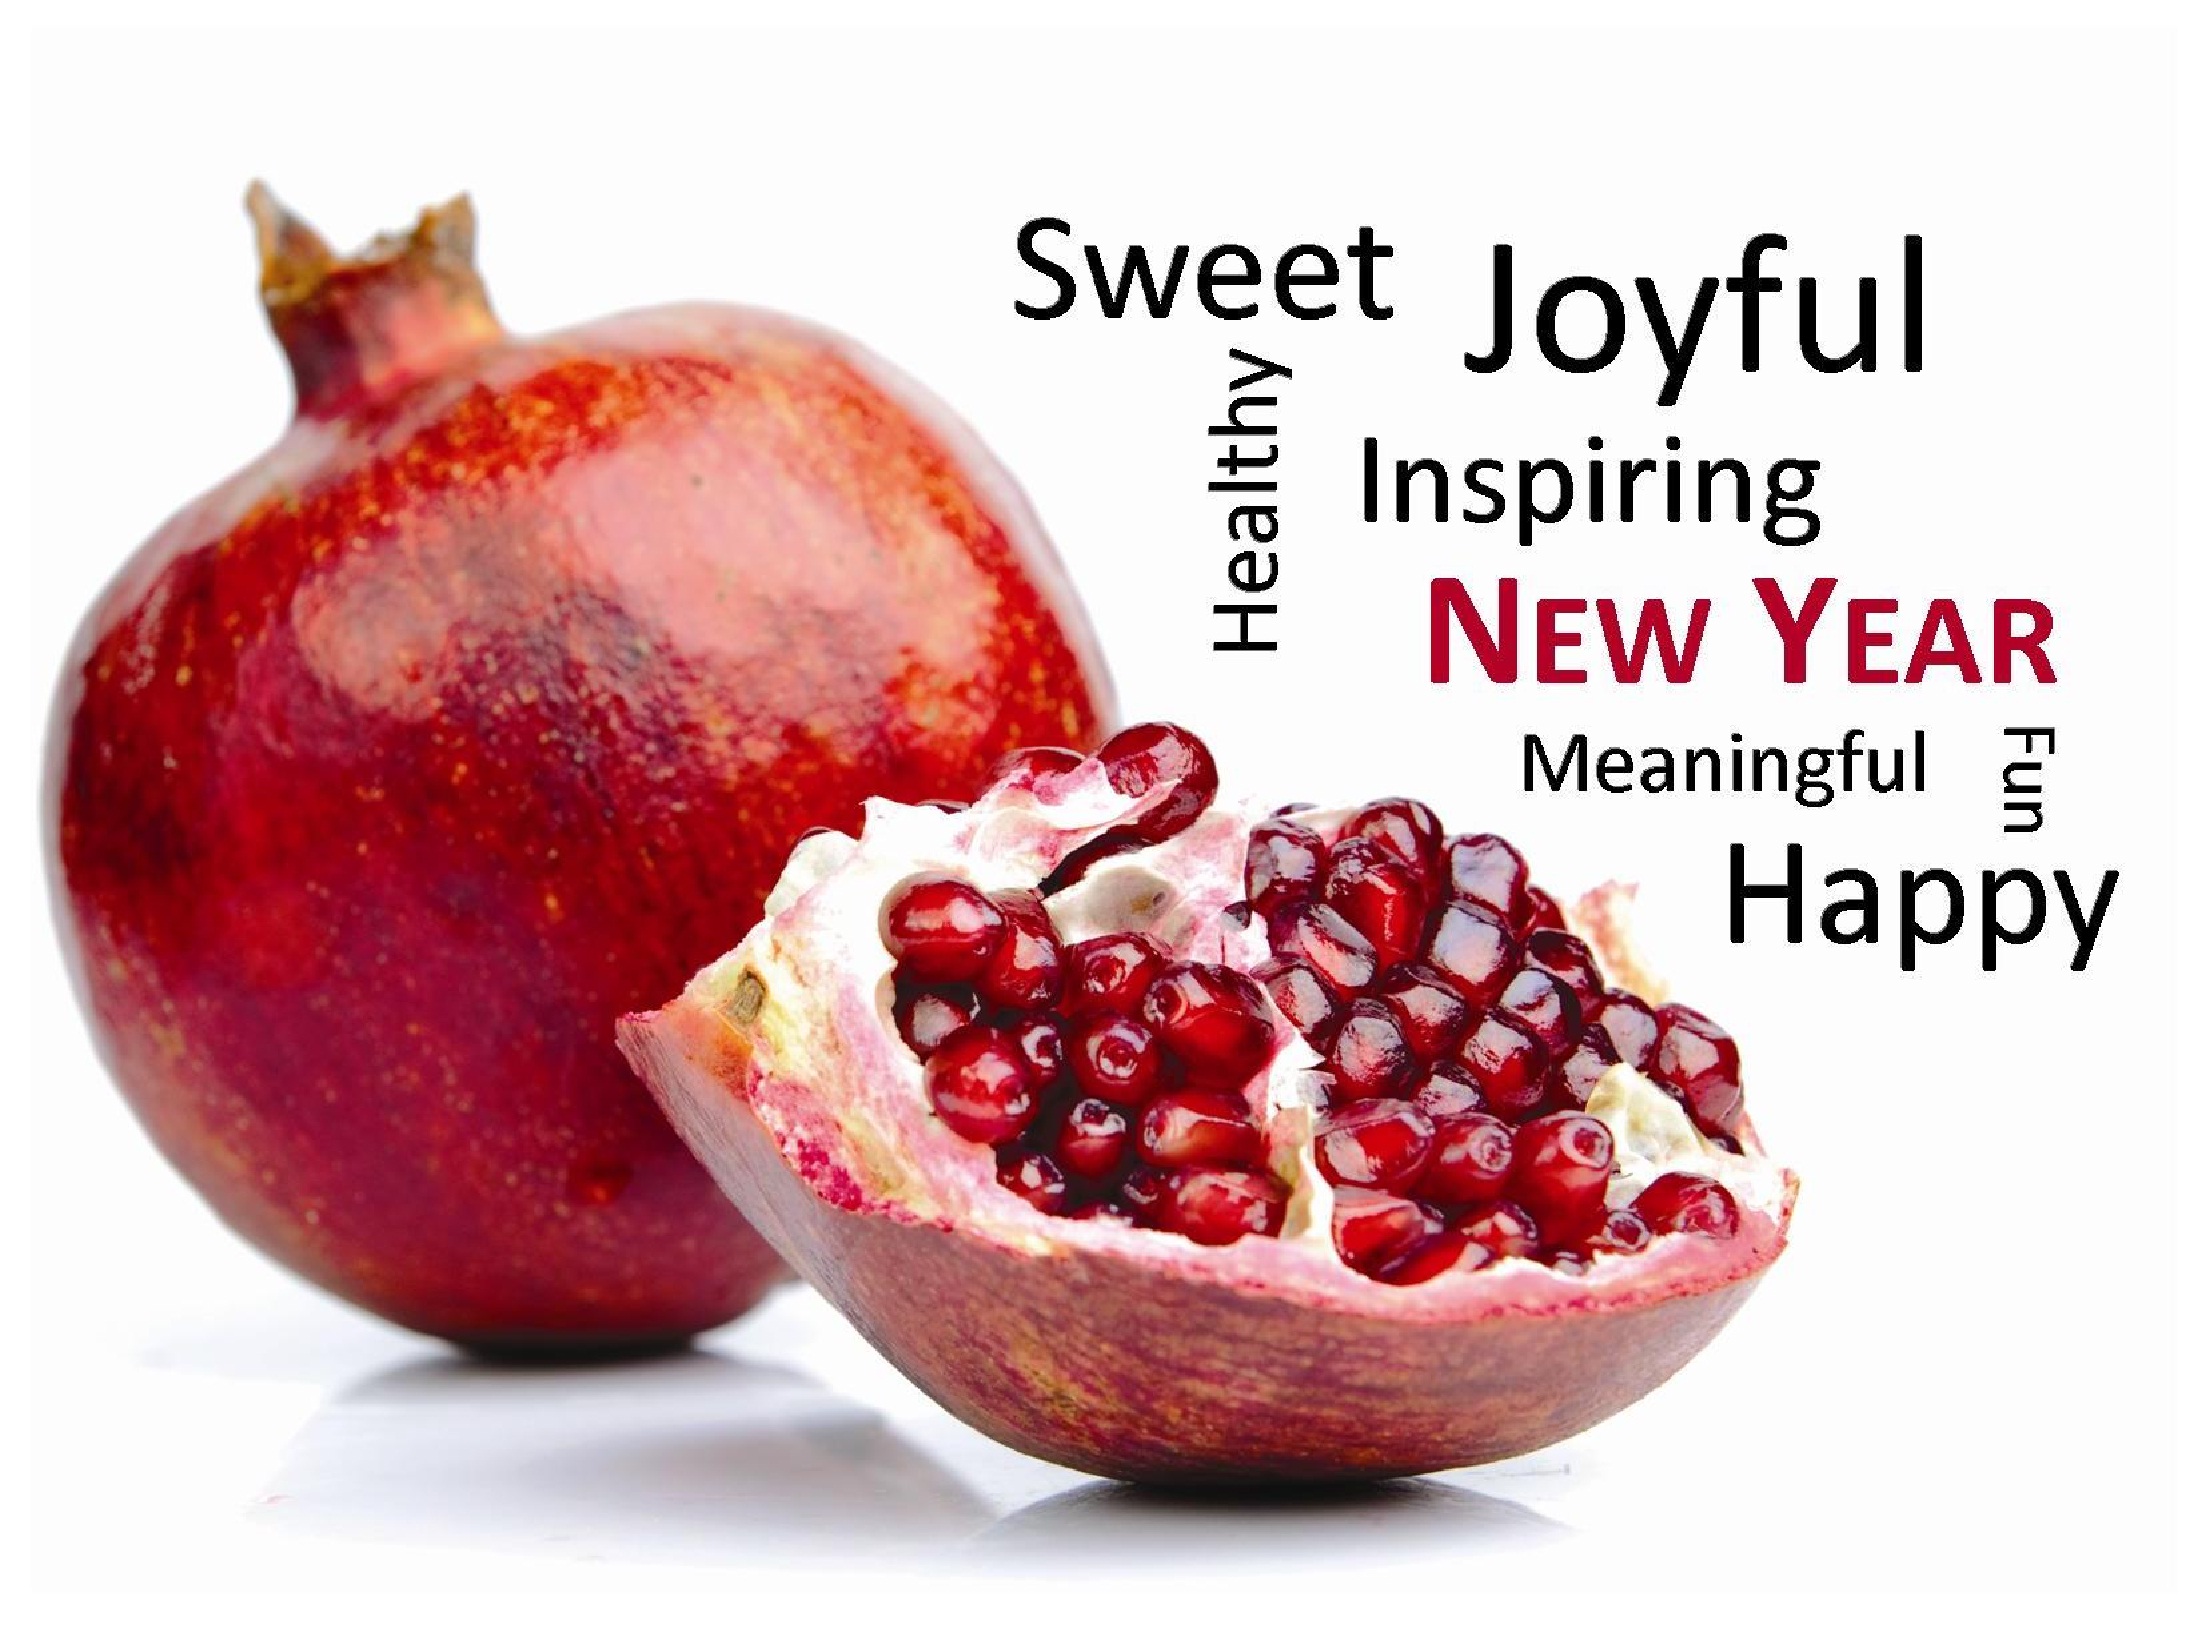 Happy Jewish New Year 2016